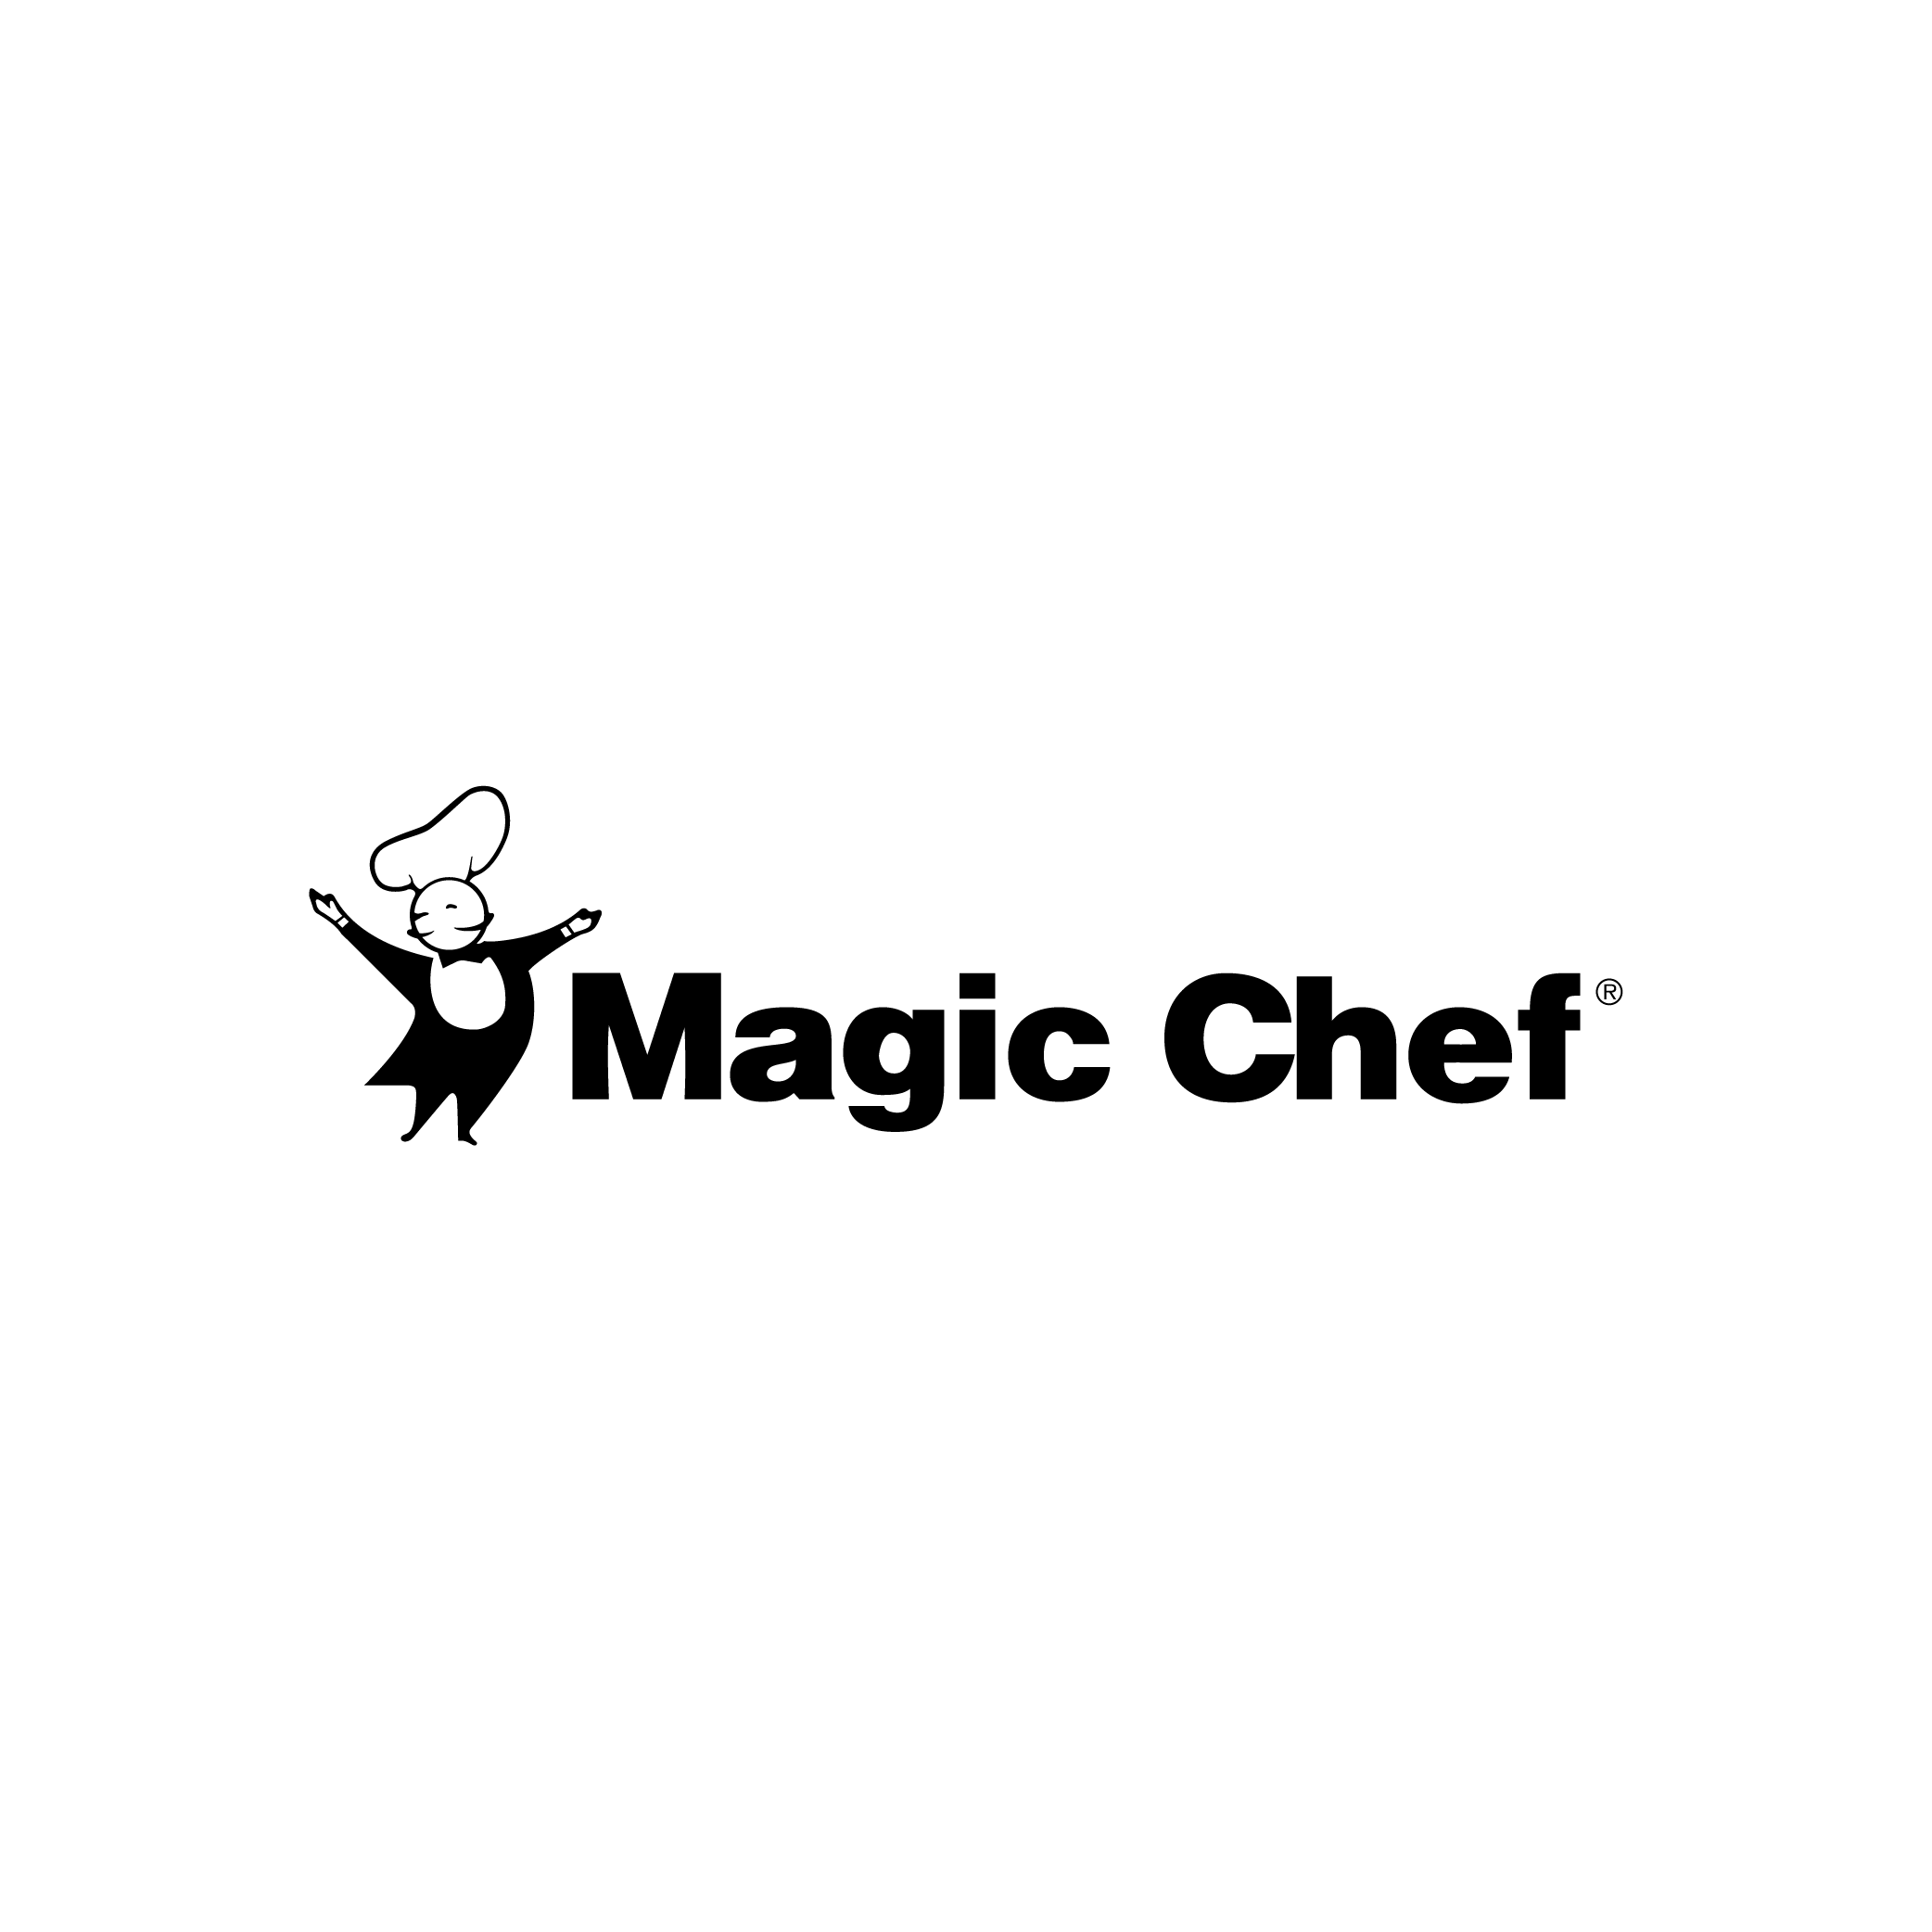  Magic Chef Appliances Logo 